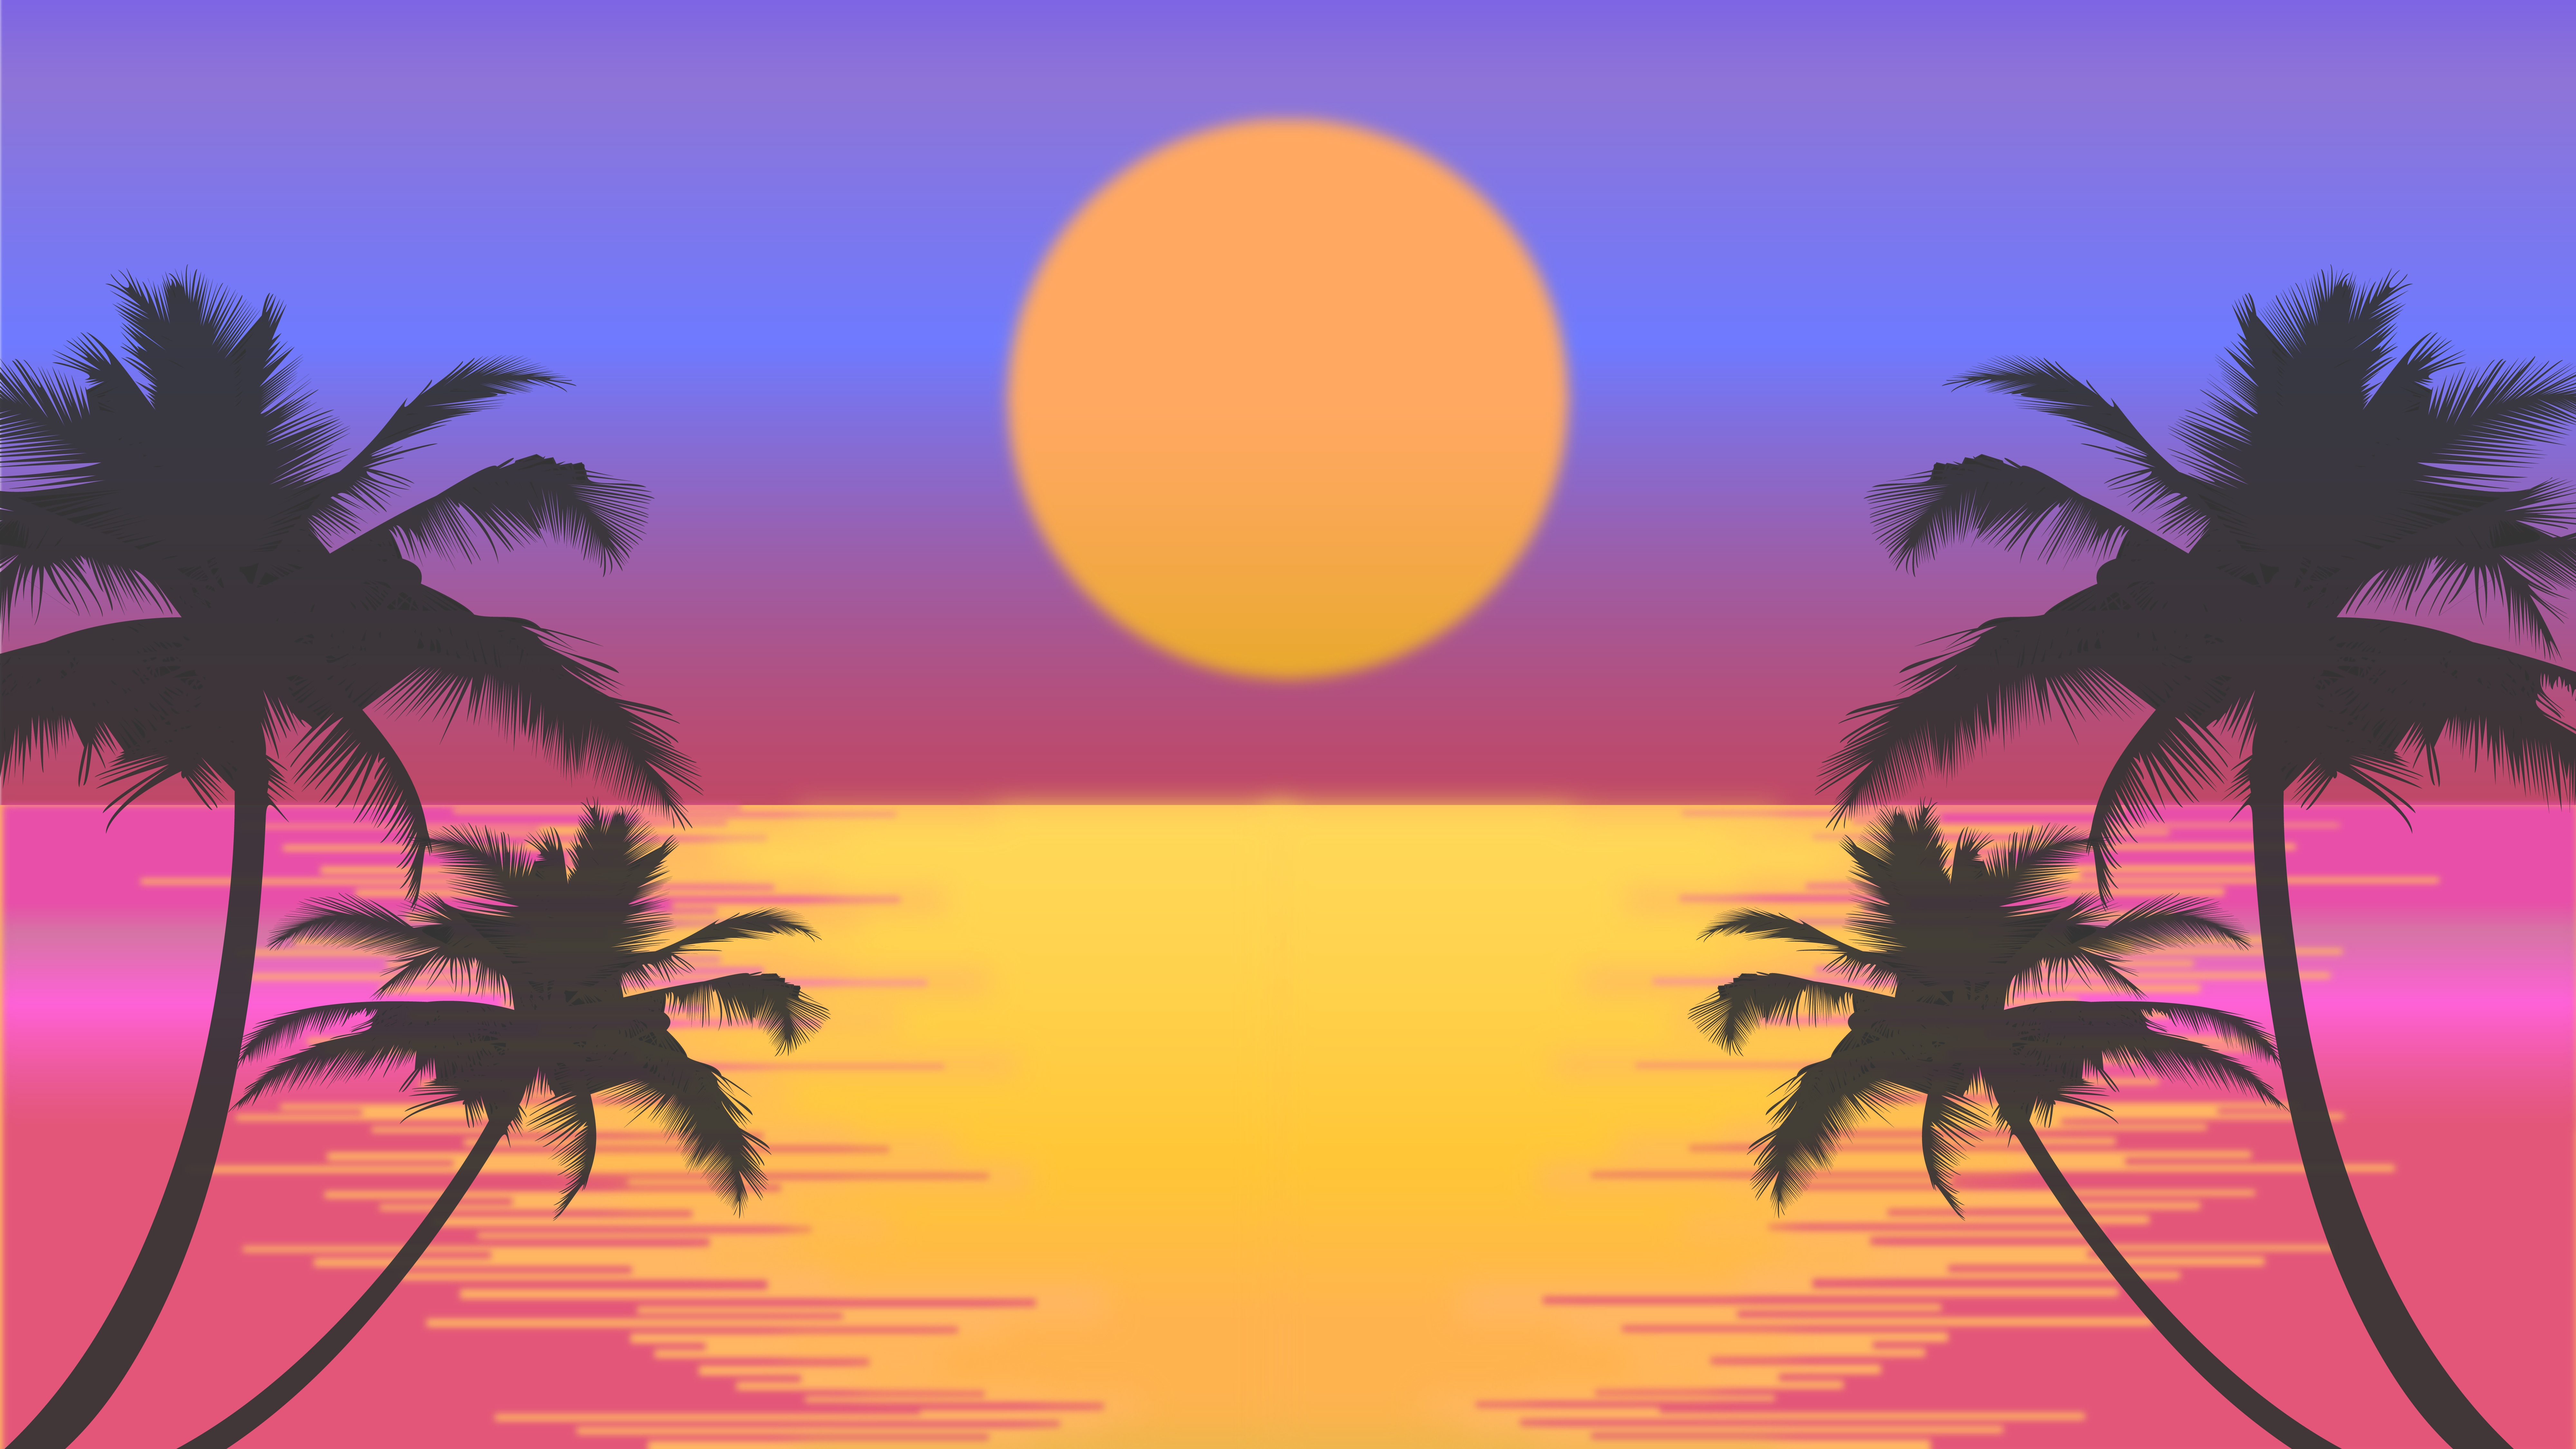 artistic, retro, palm tree, sun